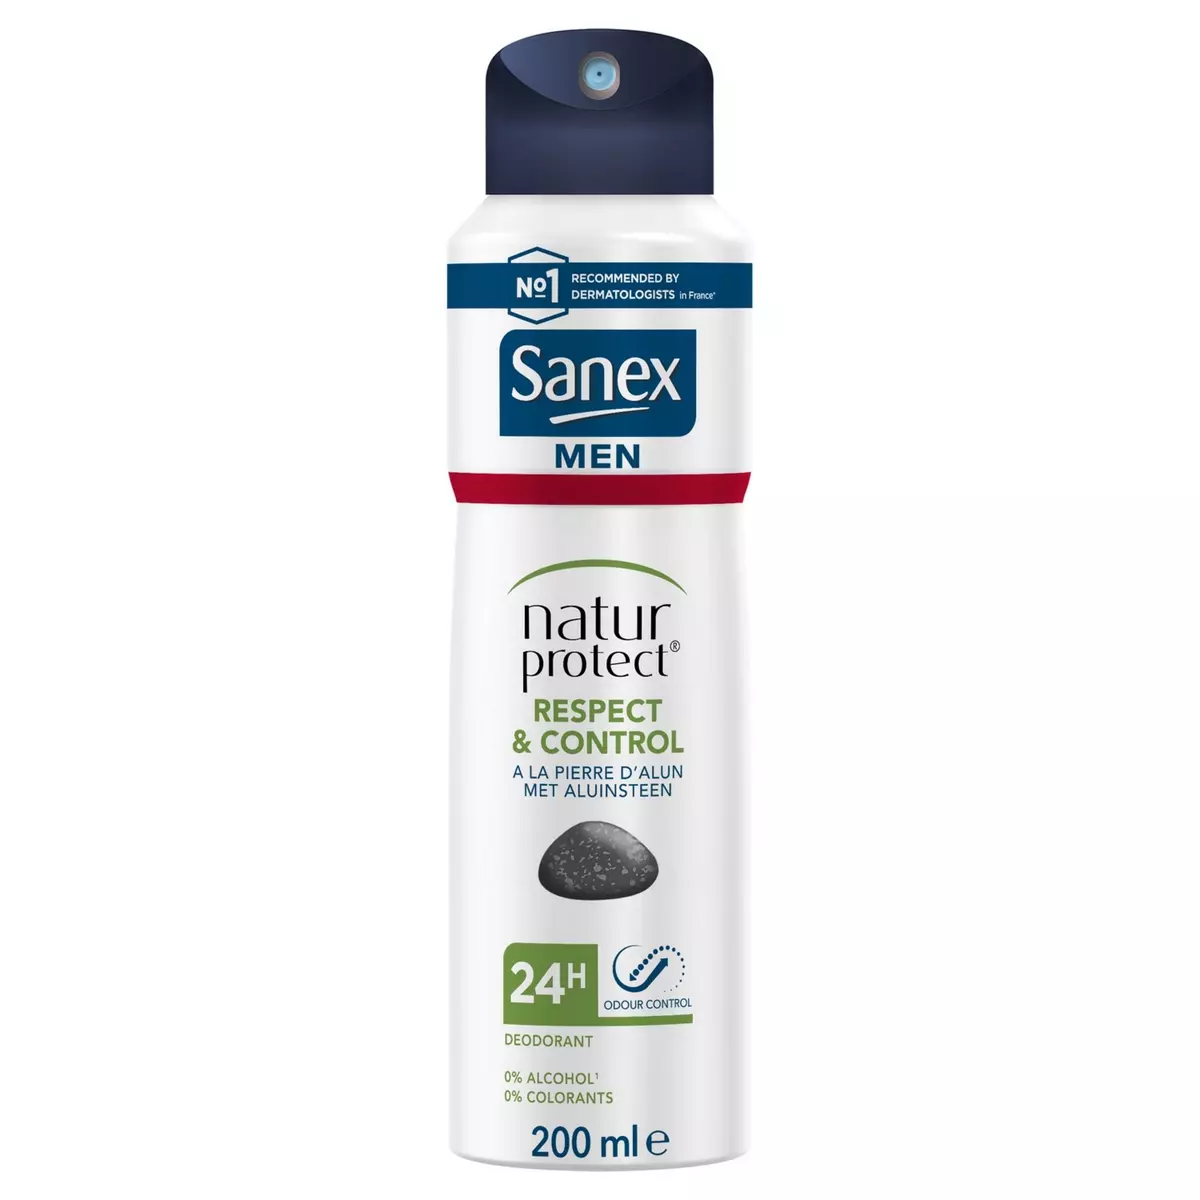 SANEX Men Natur Protect déodorant spray 24h homme respect & control 200ml